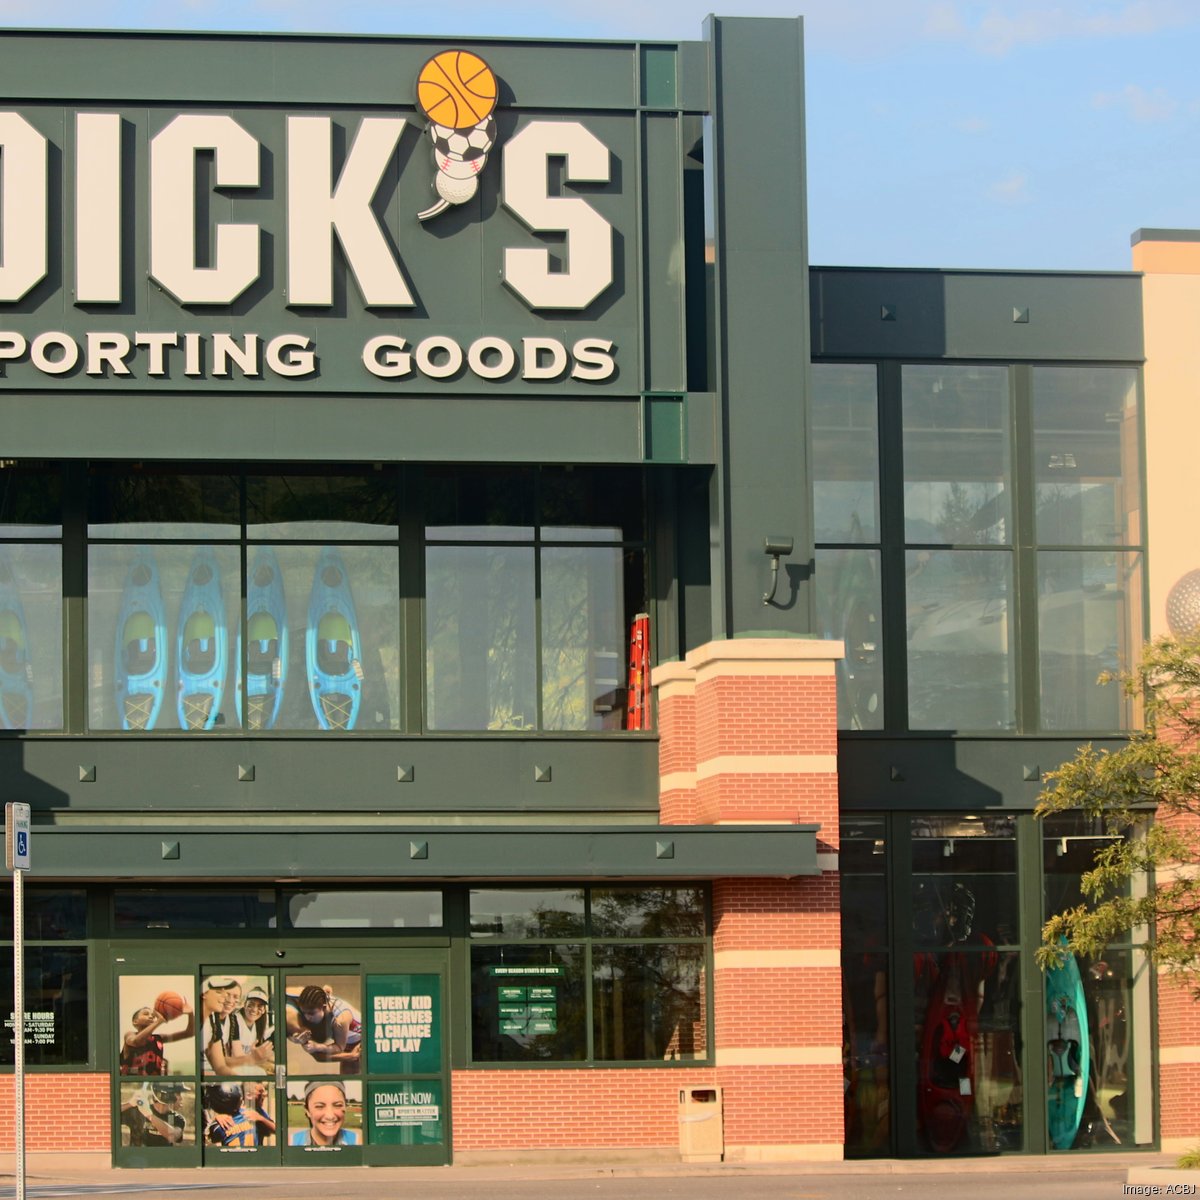 Dick's Sporting Goods (DKS): Company Profile, Stock Price, News